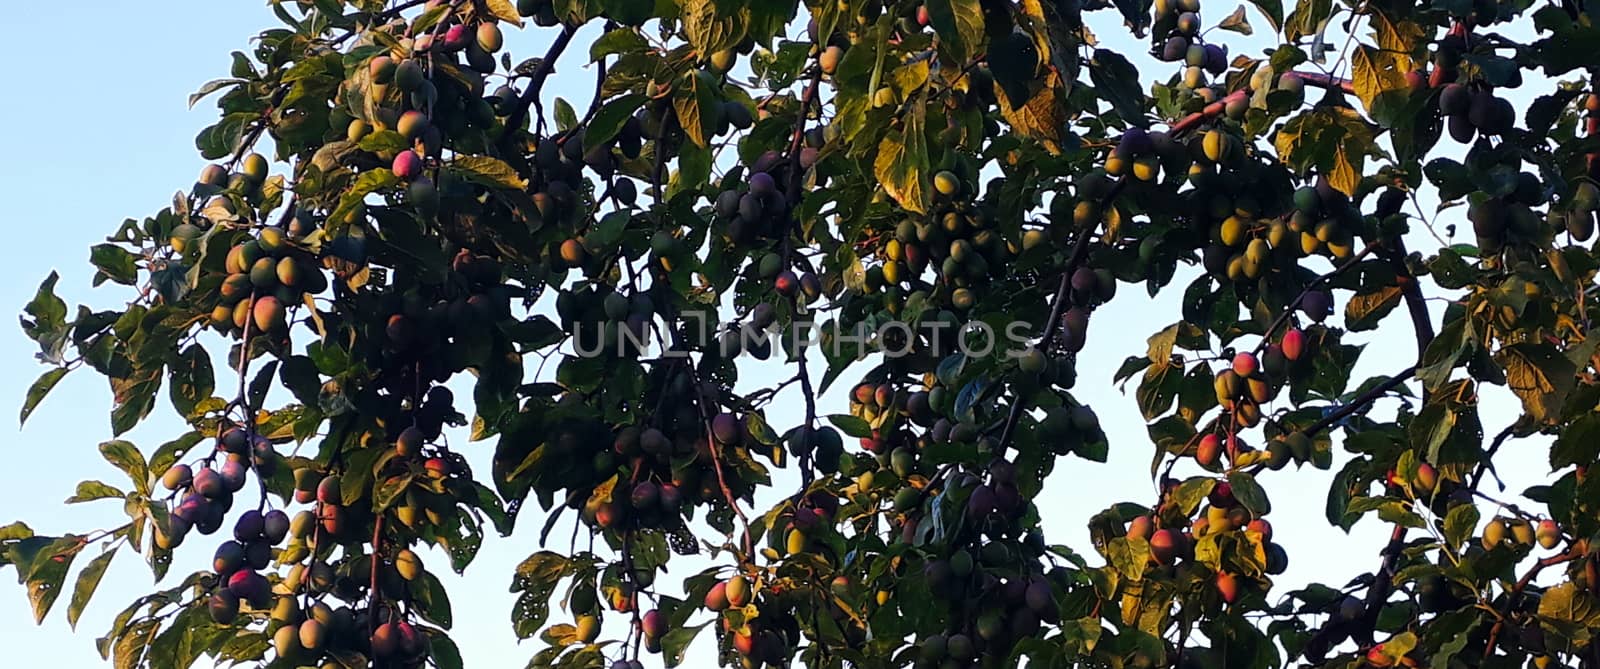 Banner. A plum tree with a lot of unripe plum fruits on it. Plum fruits. Zavidovici, Bosnia and Herzegovina.